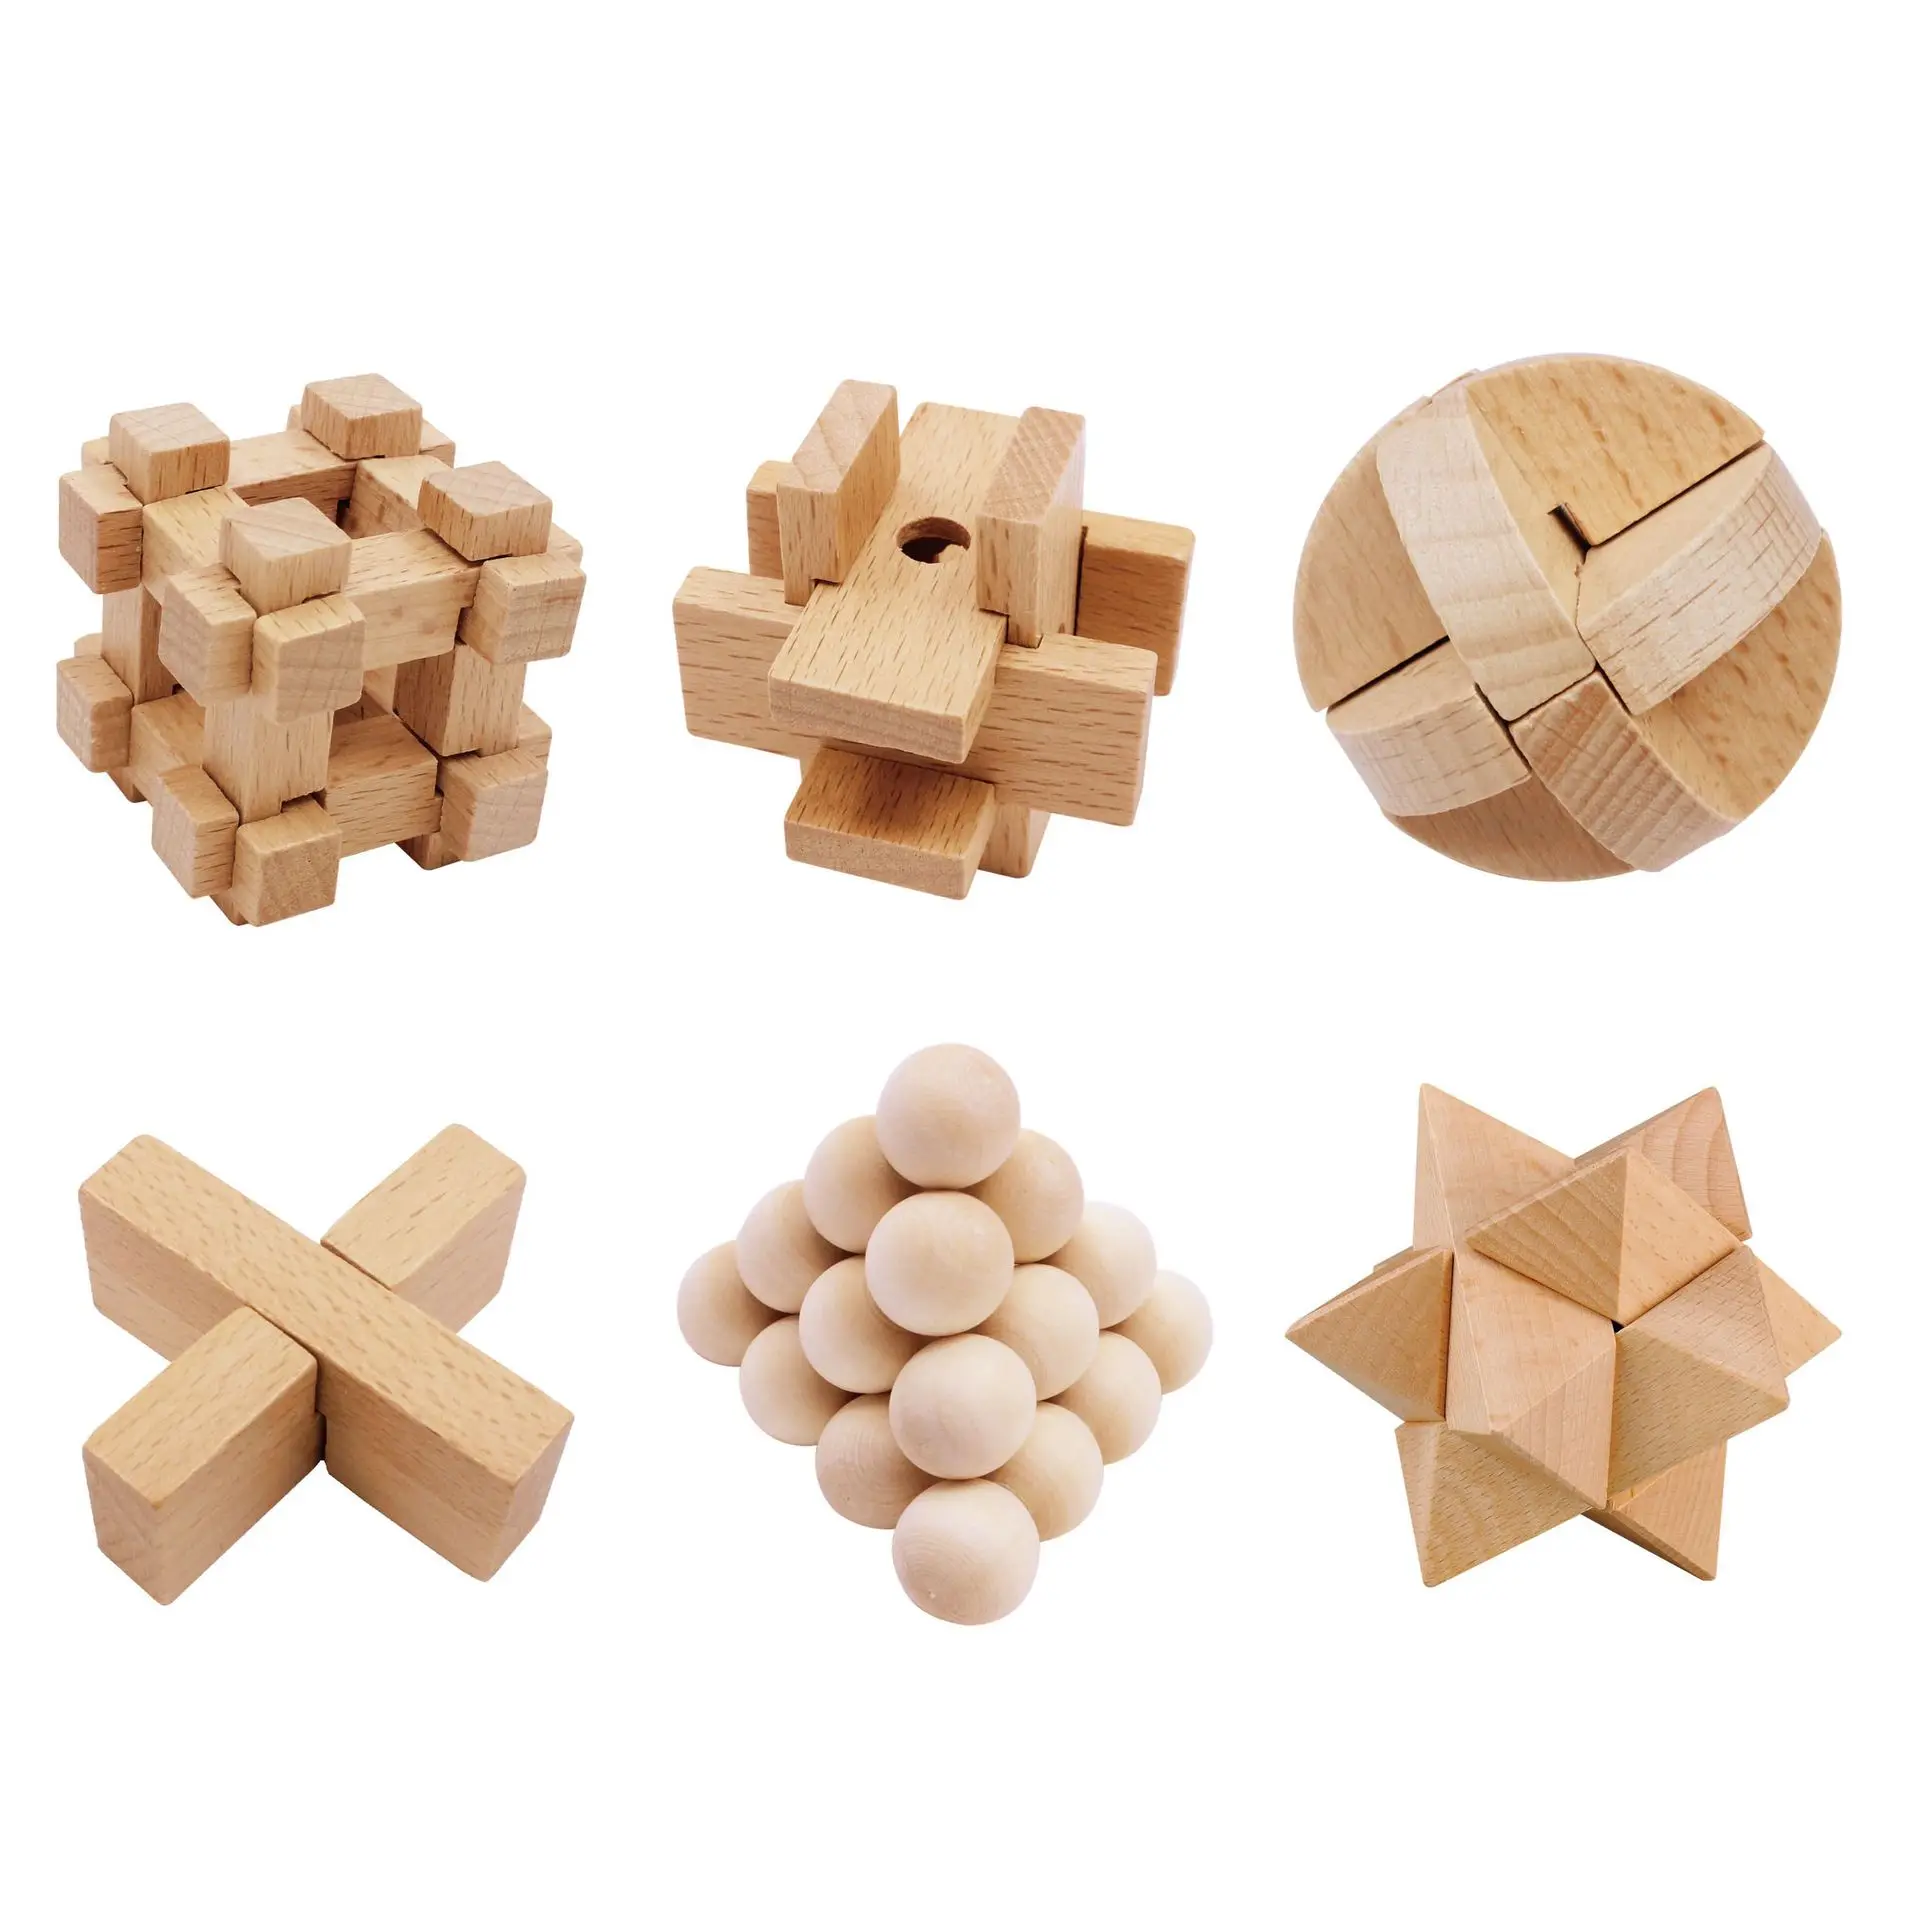 Screw puzzle wood. Wooden Puzzle Toy головоломка. Деревянная головоломка DLS 05. Brainteaser головоломка деревянный пазл. Деревянный шарик головоломка Burr Pussle.